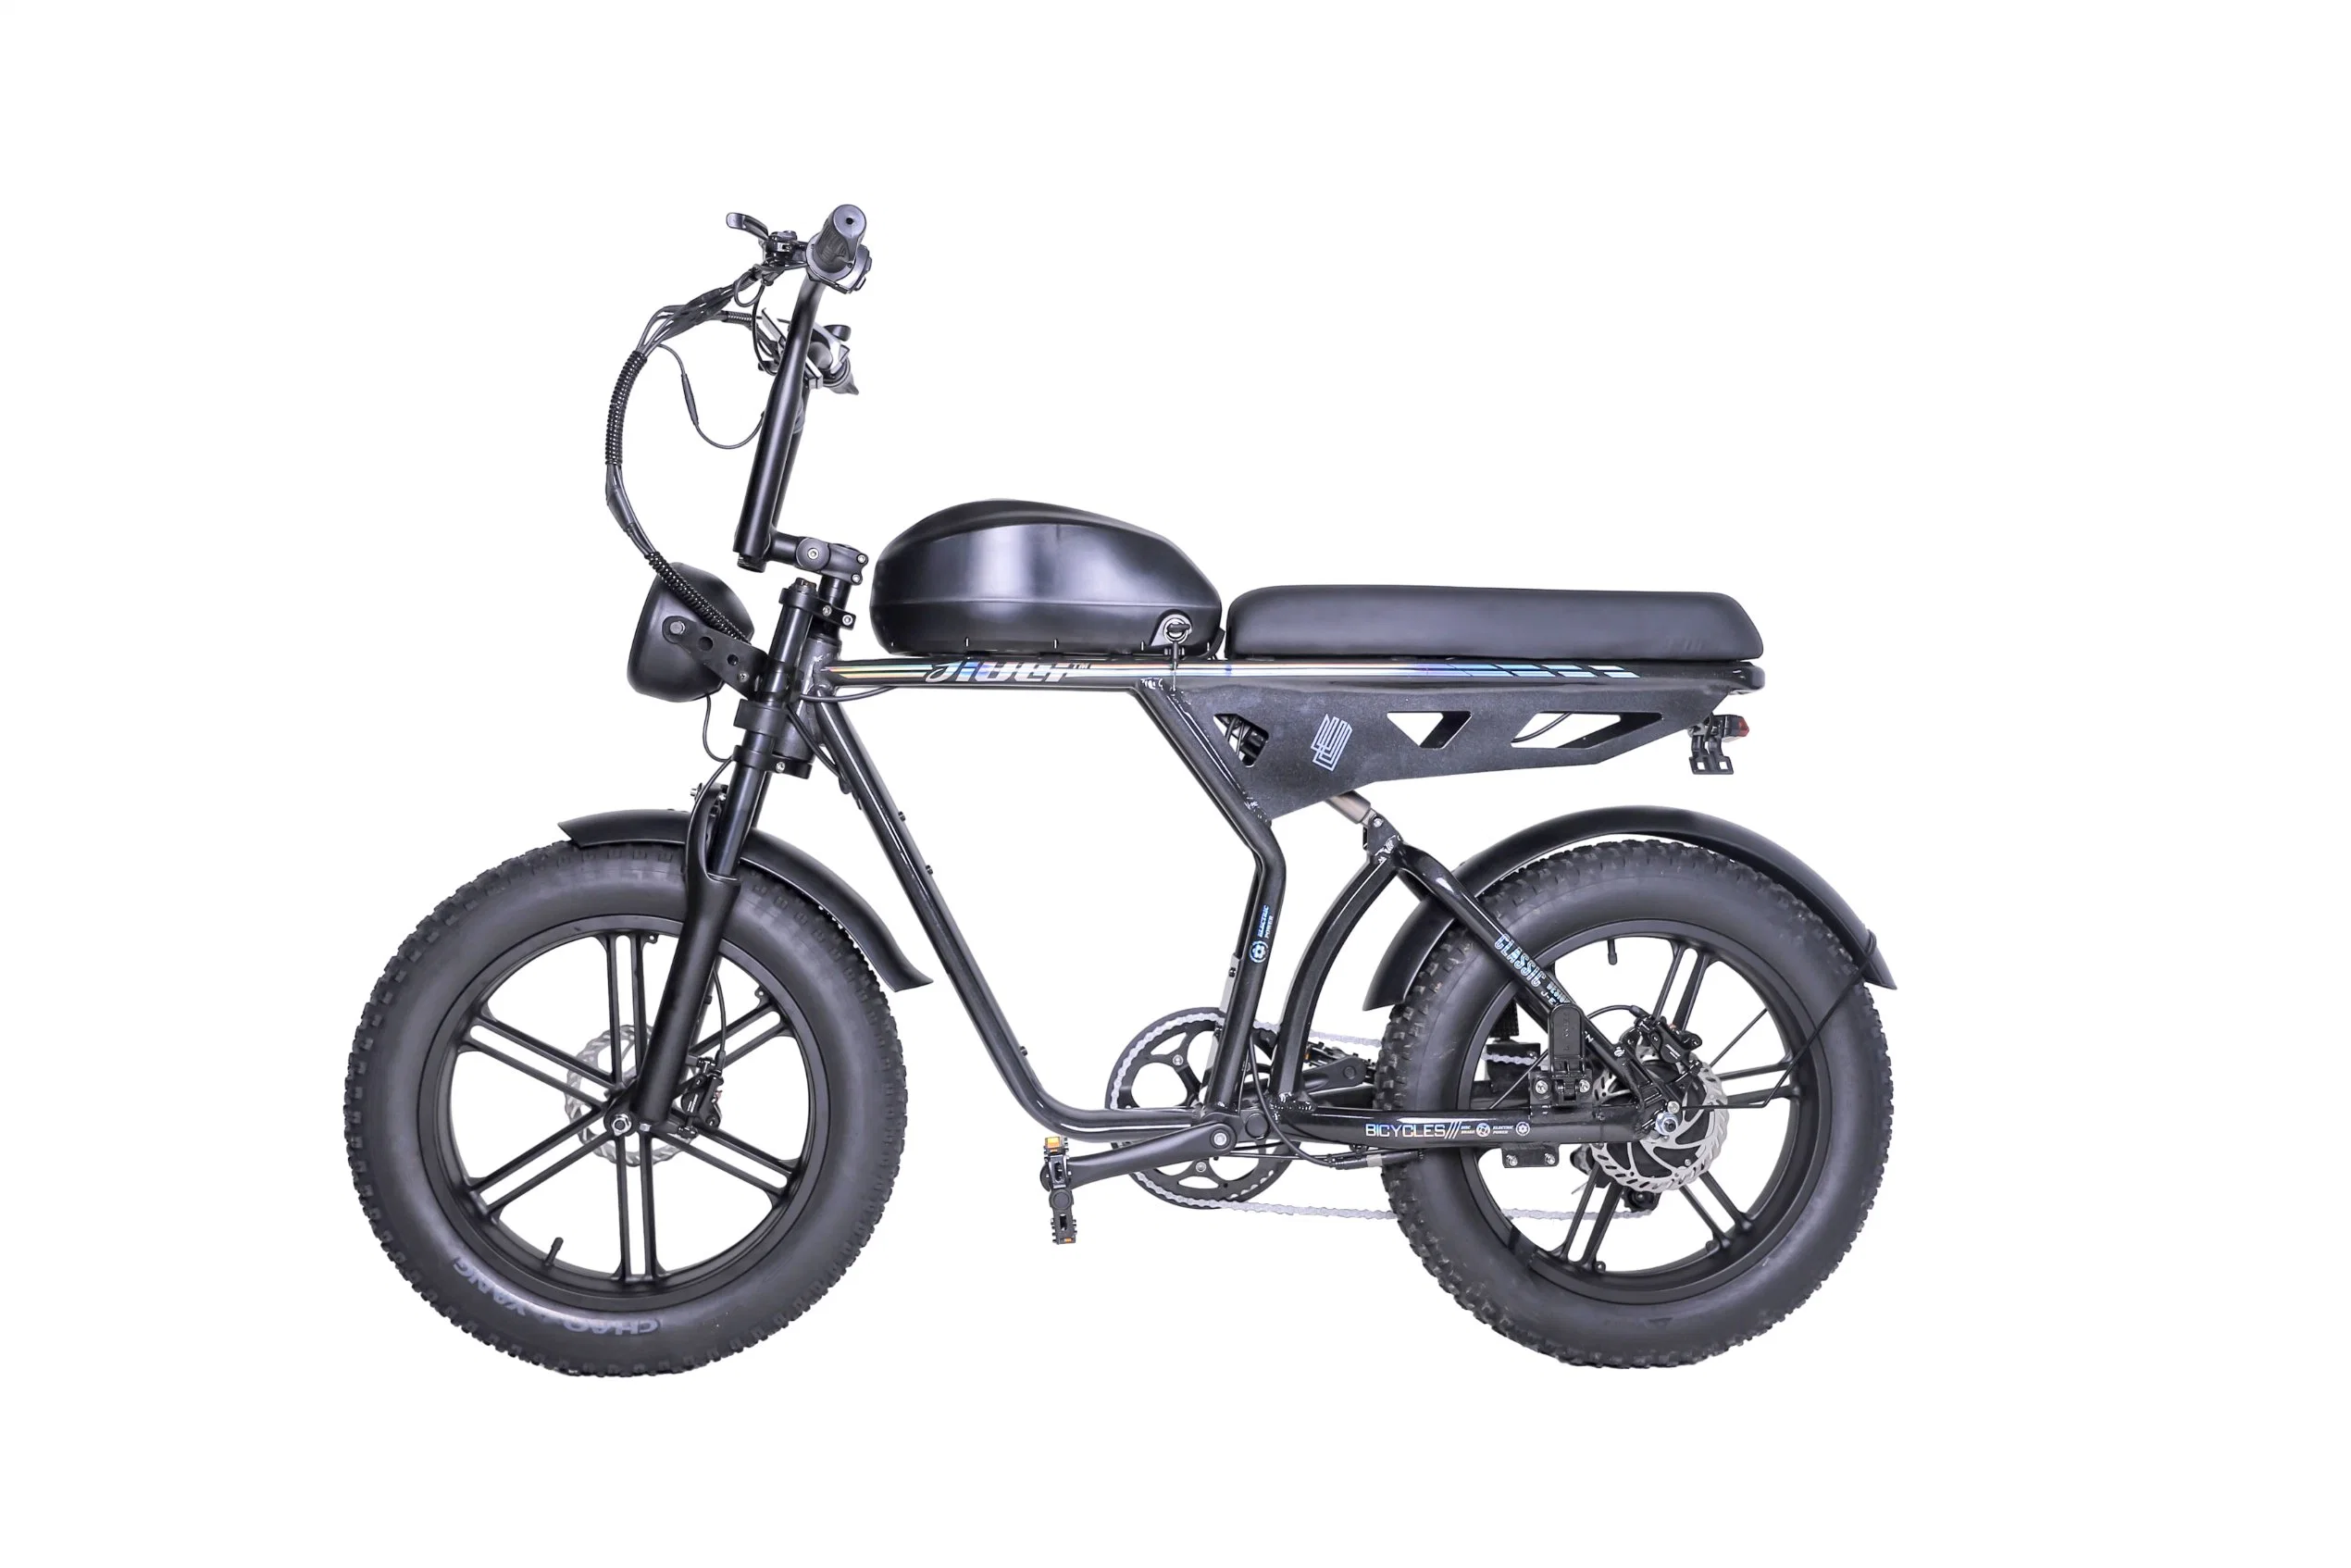 20*4.0 Fat Tire ذكر الجبال وإطار الألومنيوم للتنقل الدراجة الكهربائية E-Bicycle Ebike محرك ثنائي متوفر في المخزون في الولايات المتحدة، بما في ذلك الشحن